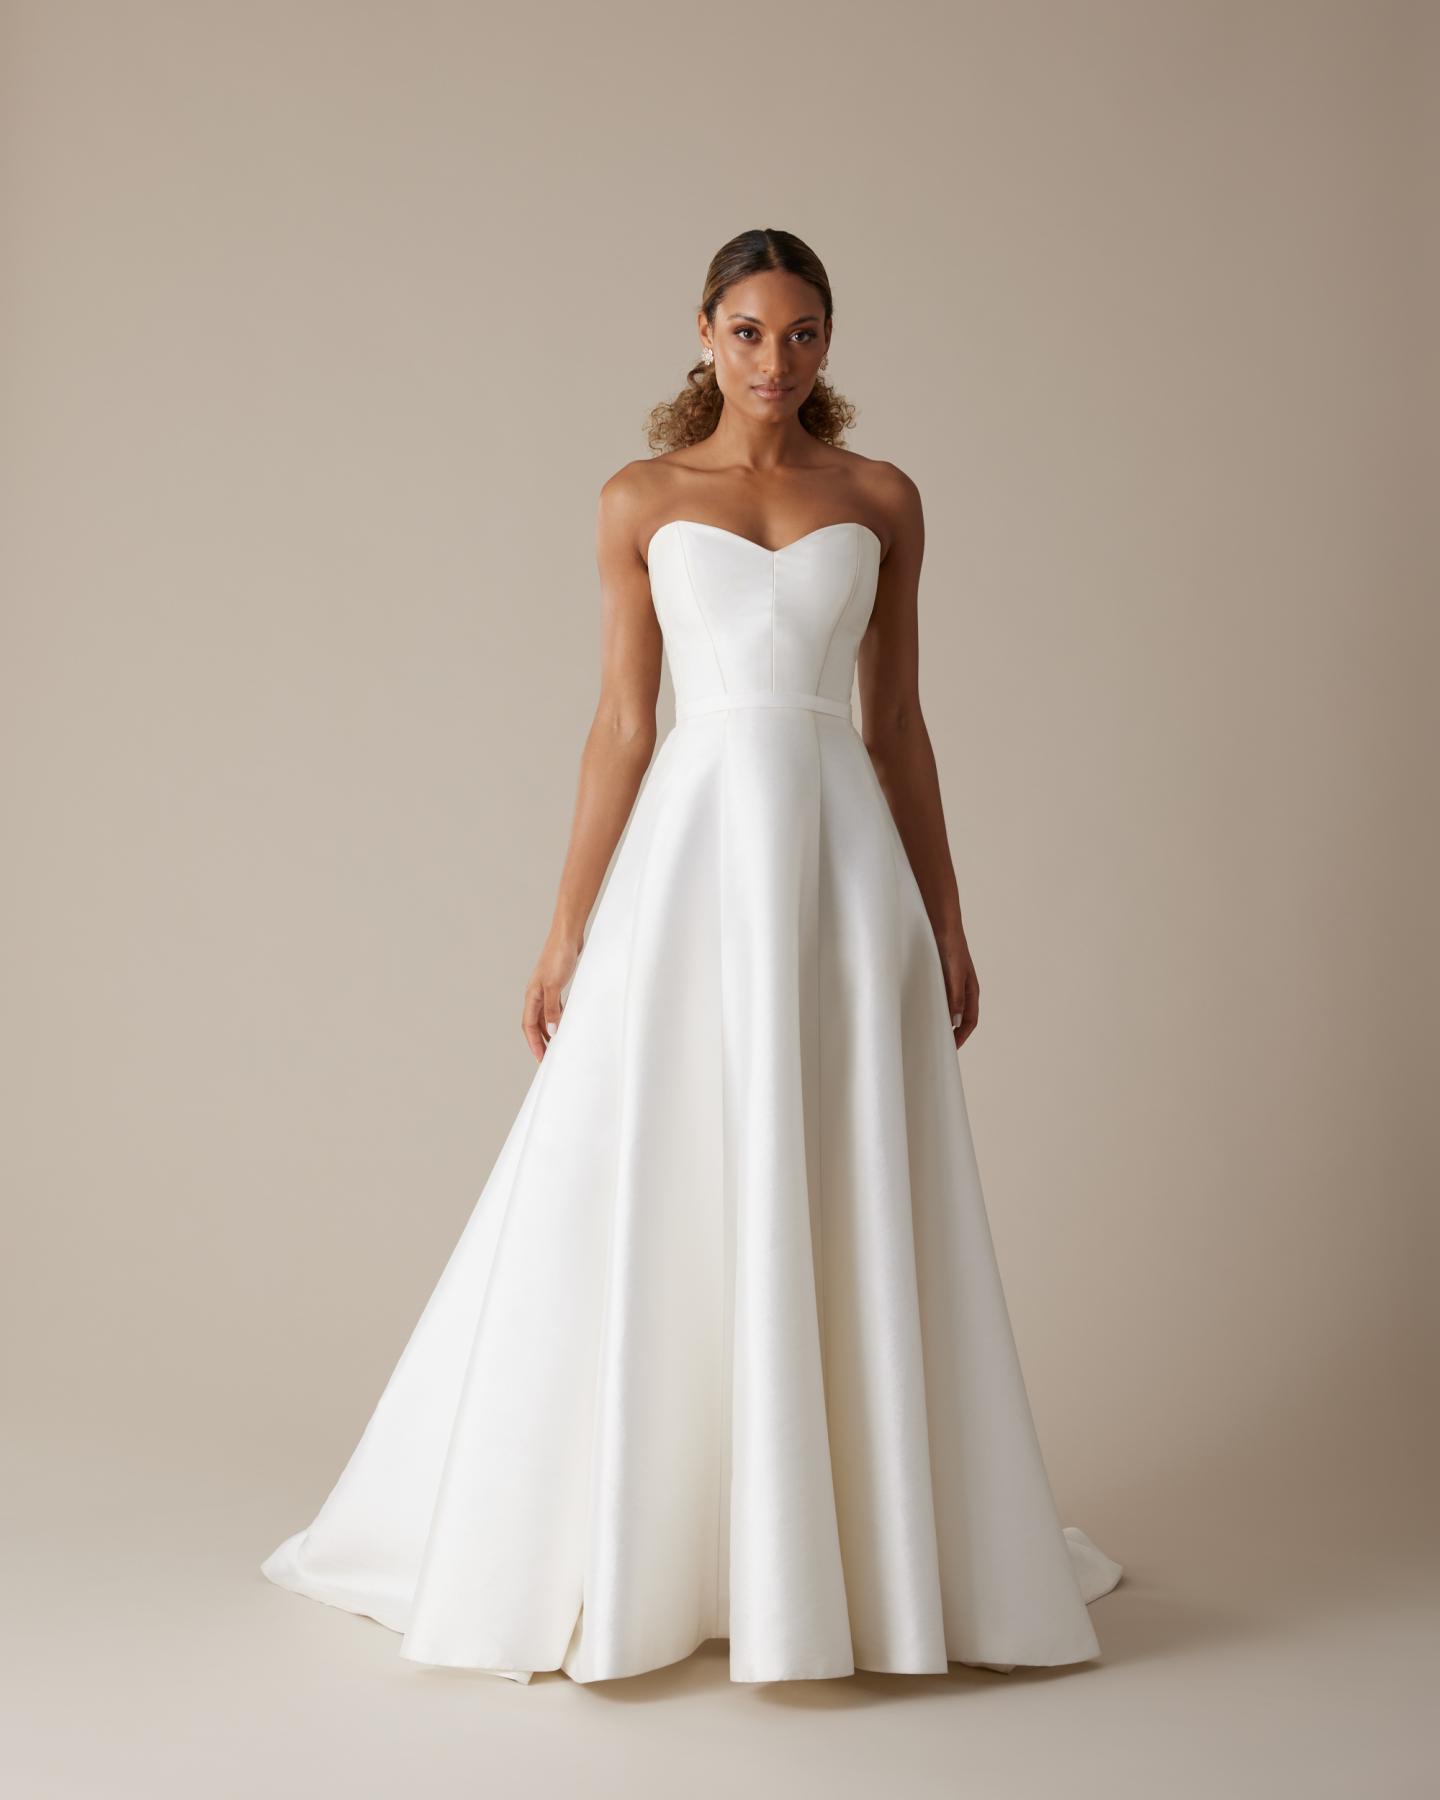 Kitty Nina | Classic A-Line Wedding Dress | Karen Willis Holmes